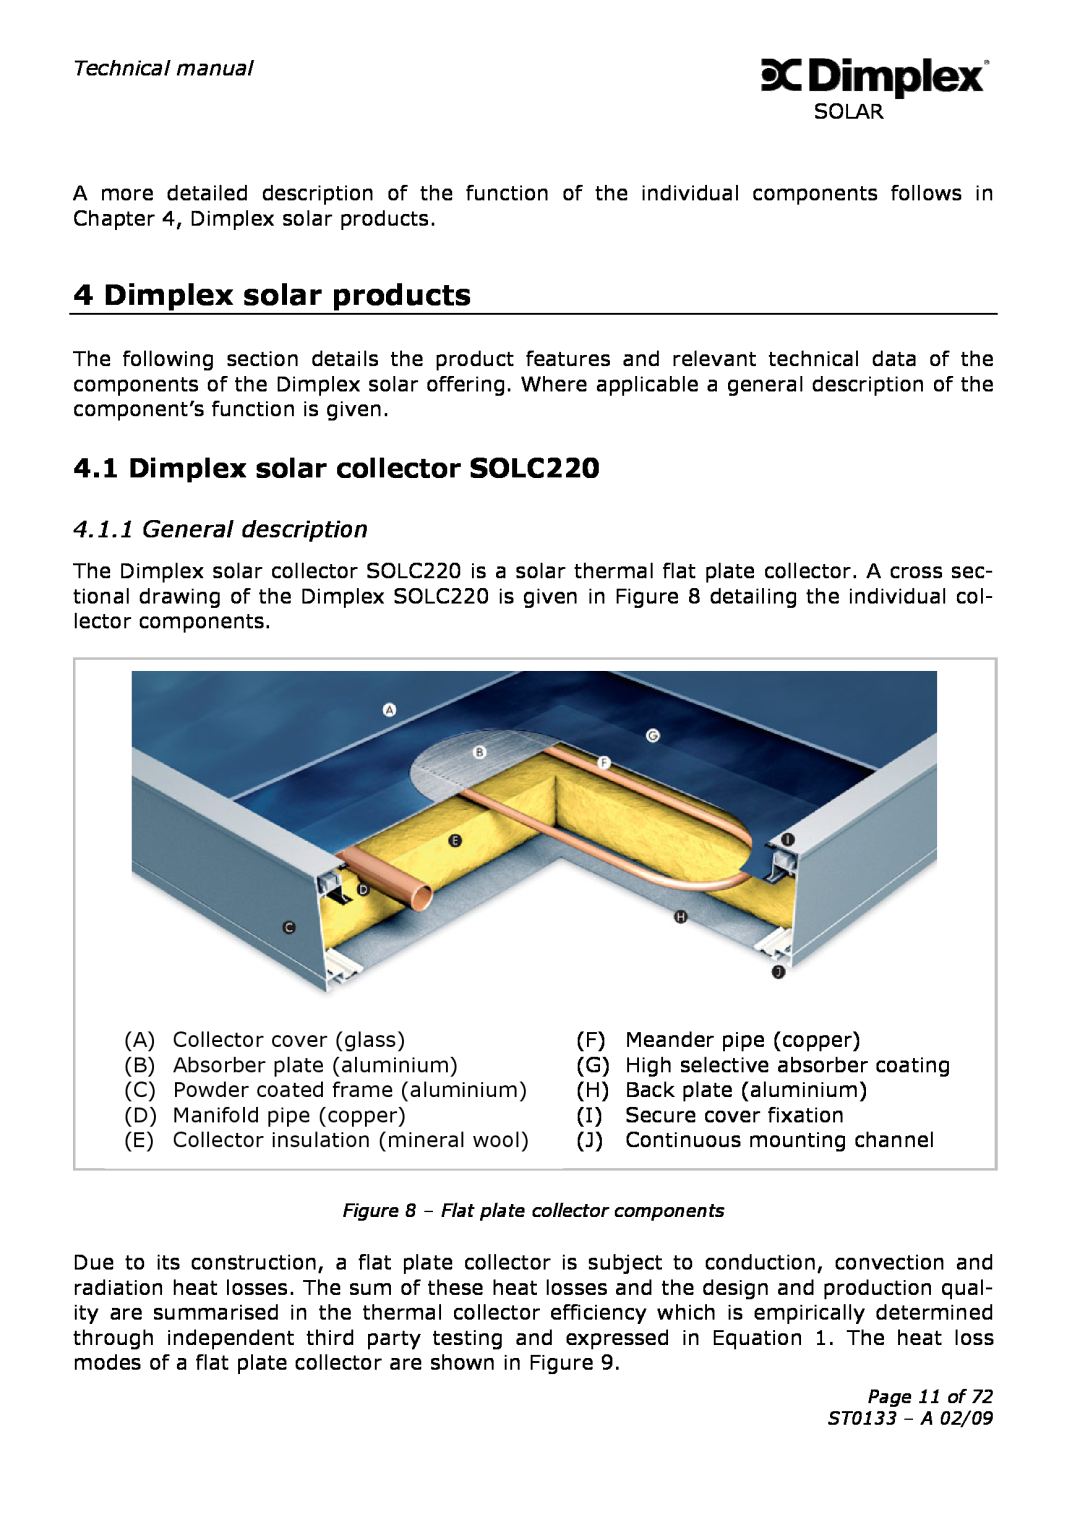 Dimplex ST0133 technical manual Dimplex solar products, Dimplex solar collector SOLC220, General description 